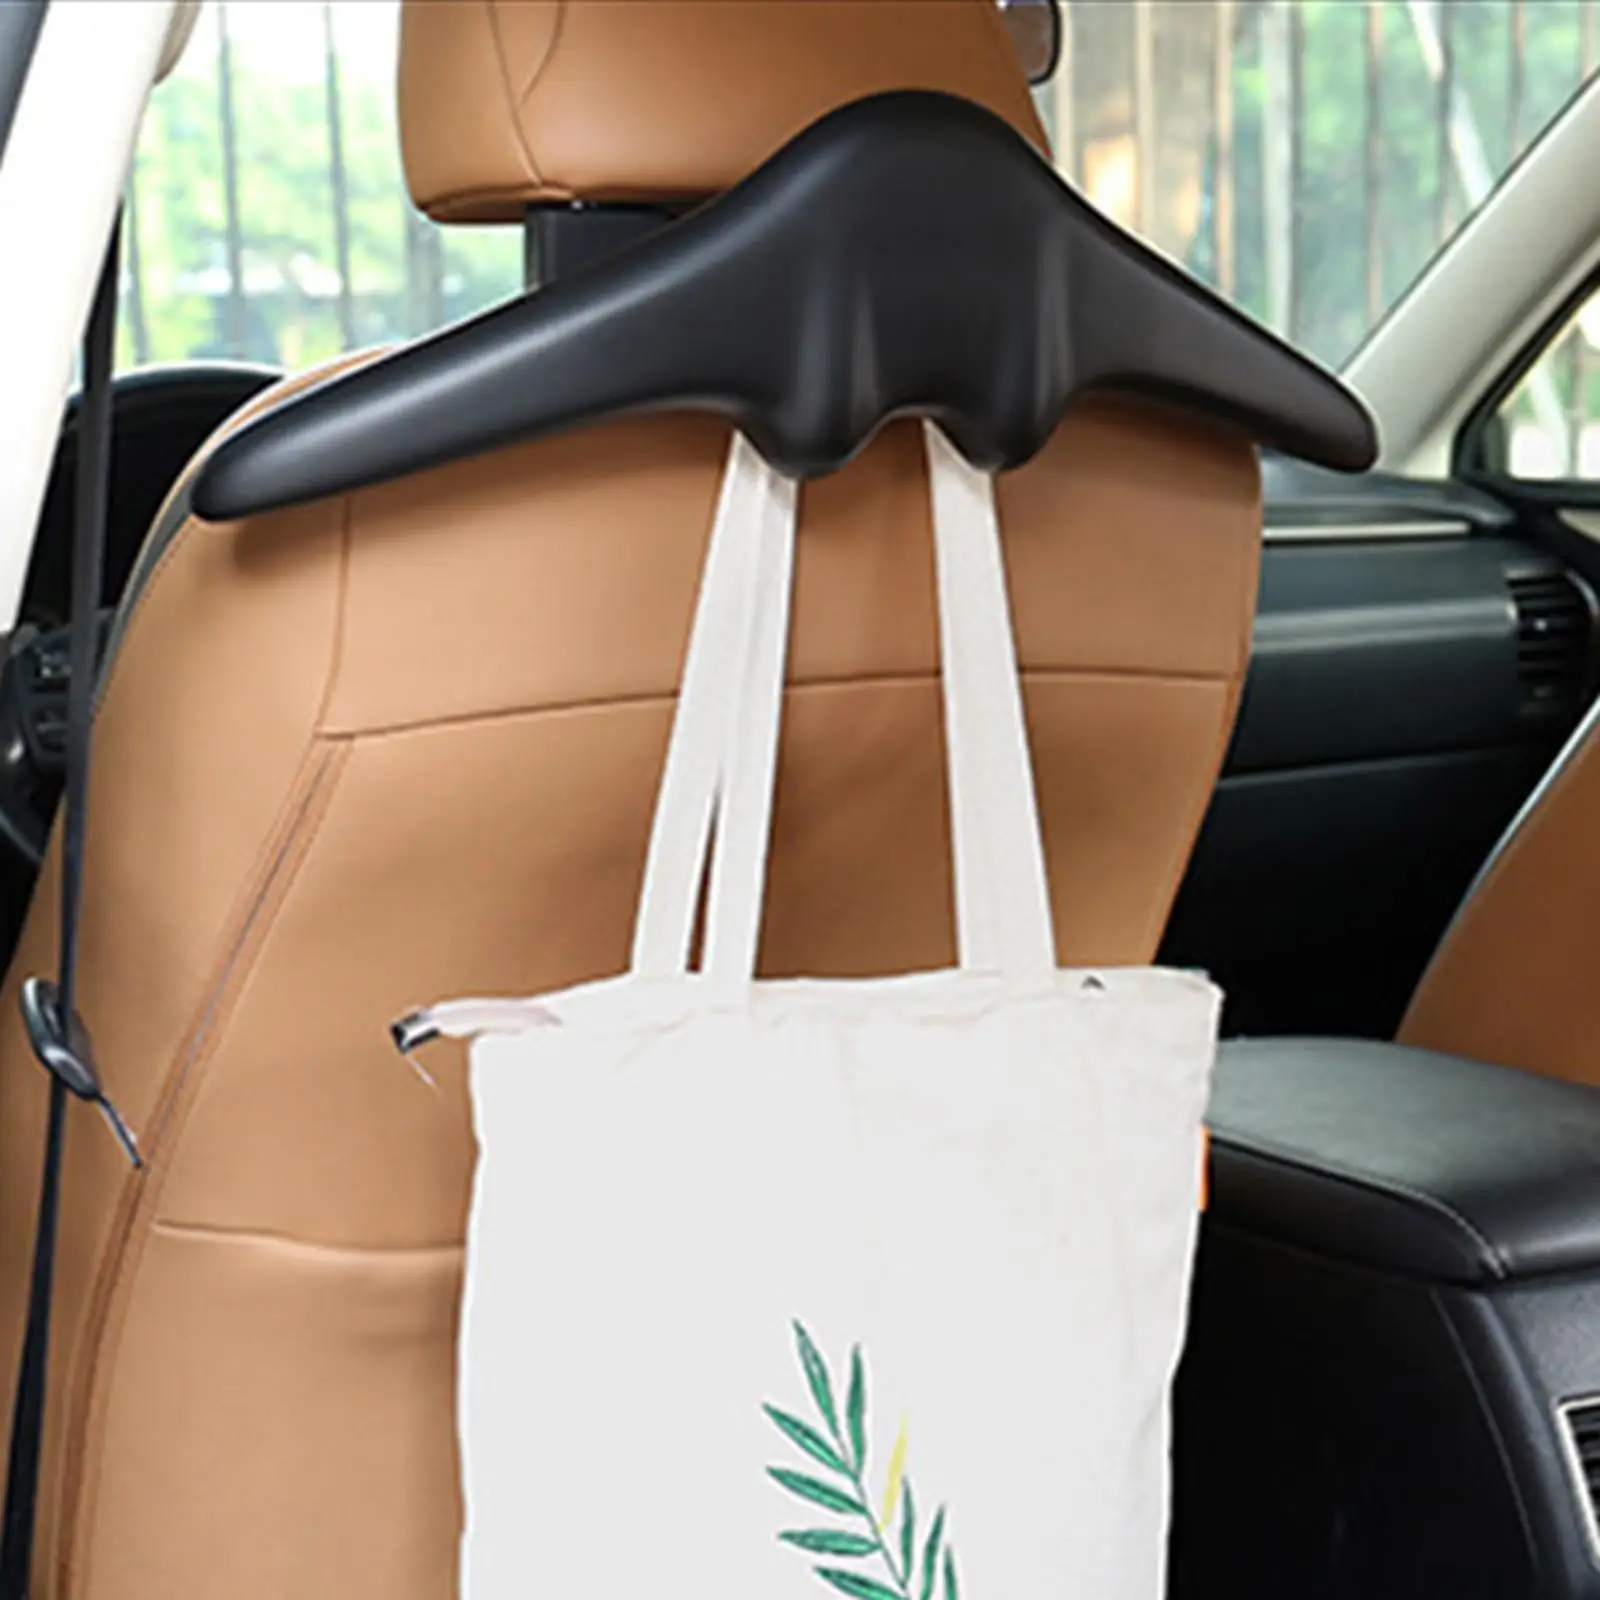 Multifunctional Car Coat Hangers Portable Safety Hanger Holder Fit for Bags